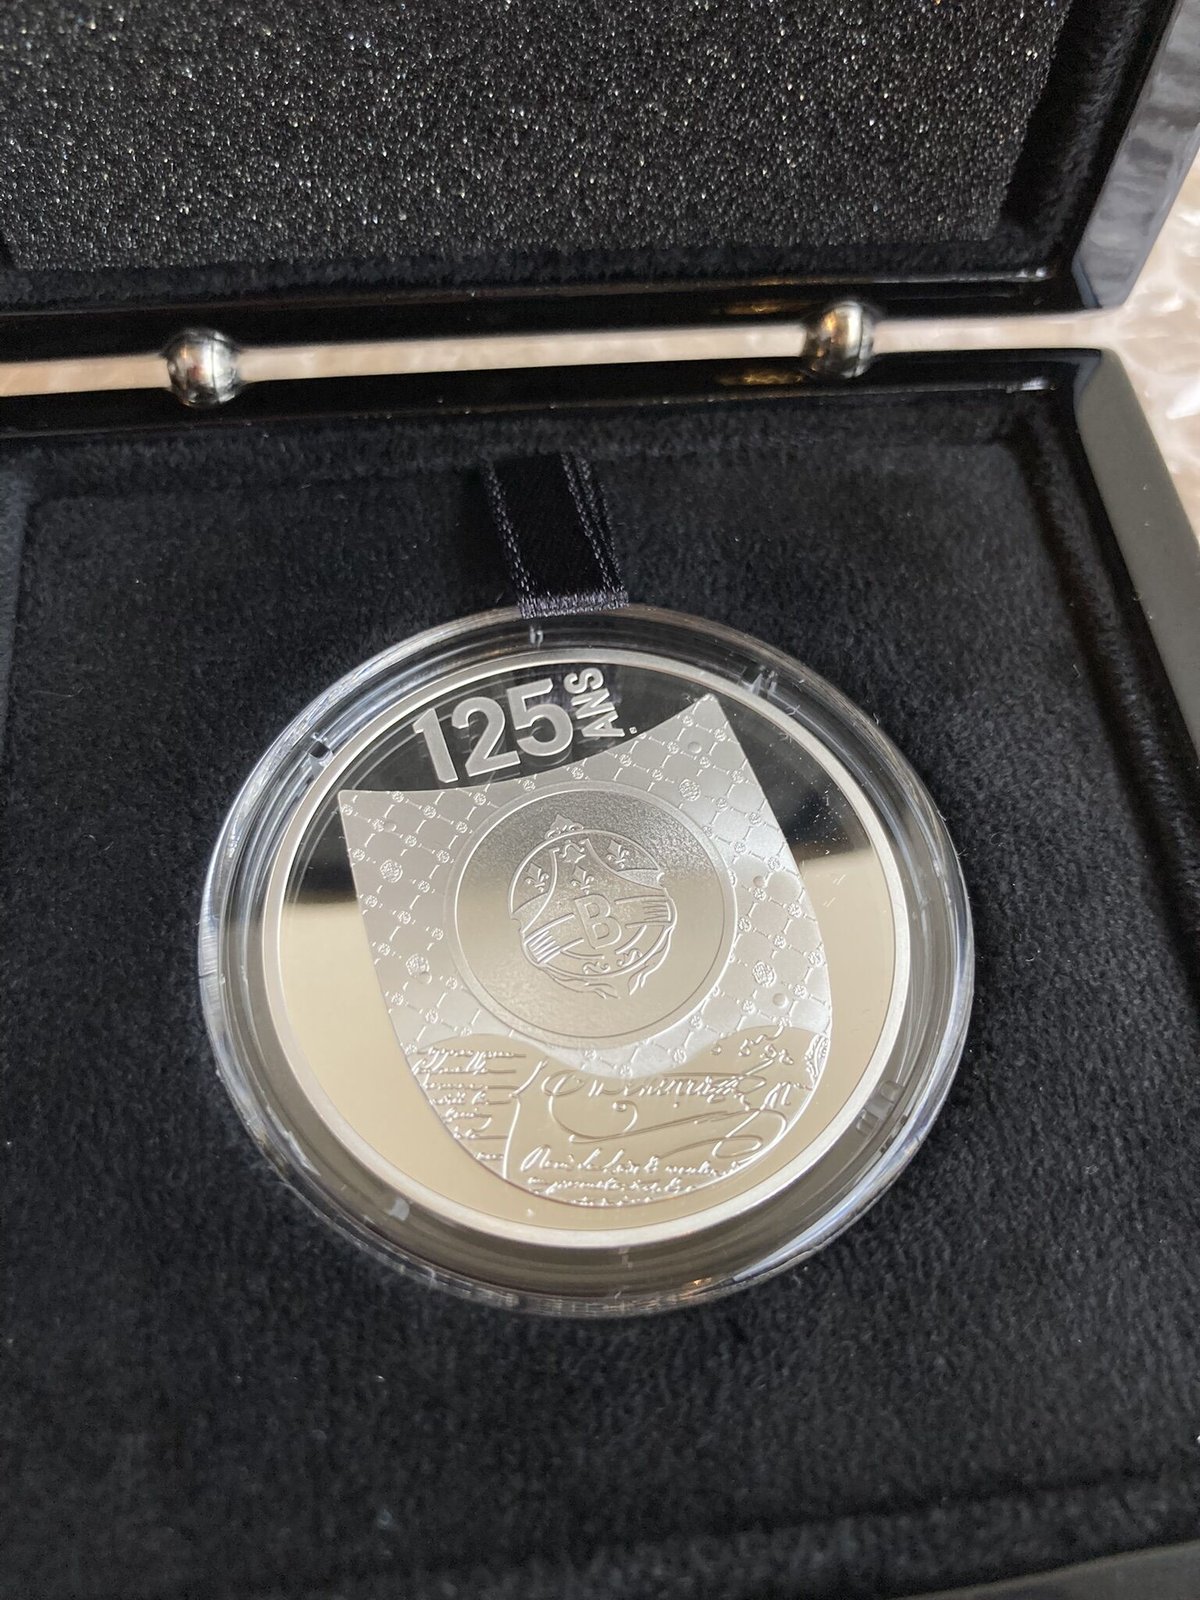 BERLUTI公式 フランス造幣局 ベルルッティ125周年記念銀貨 10ユーロ